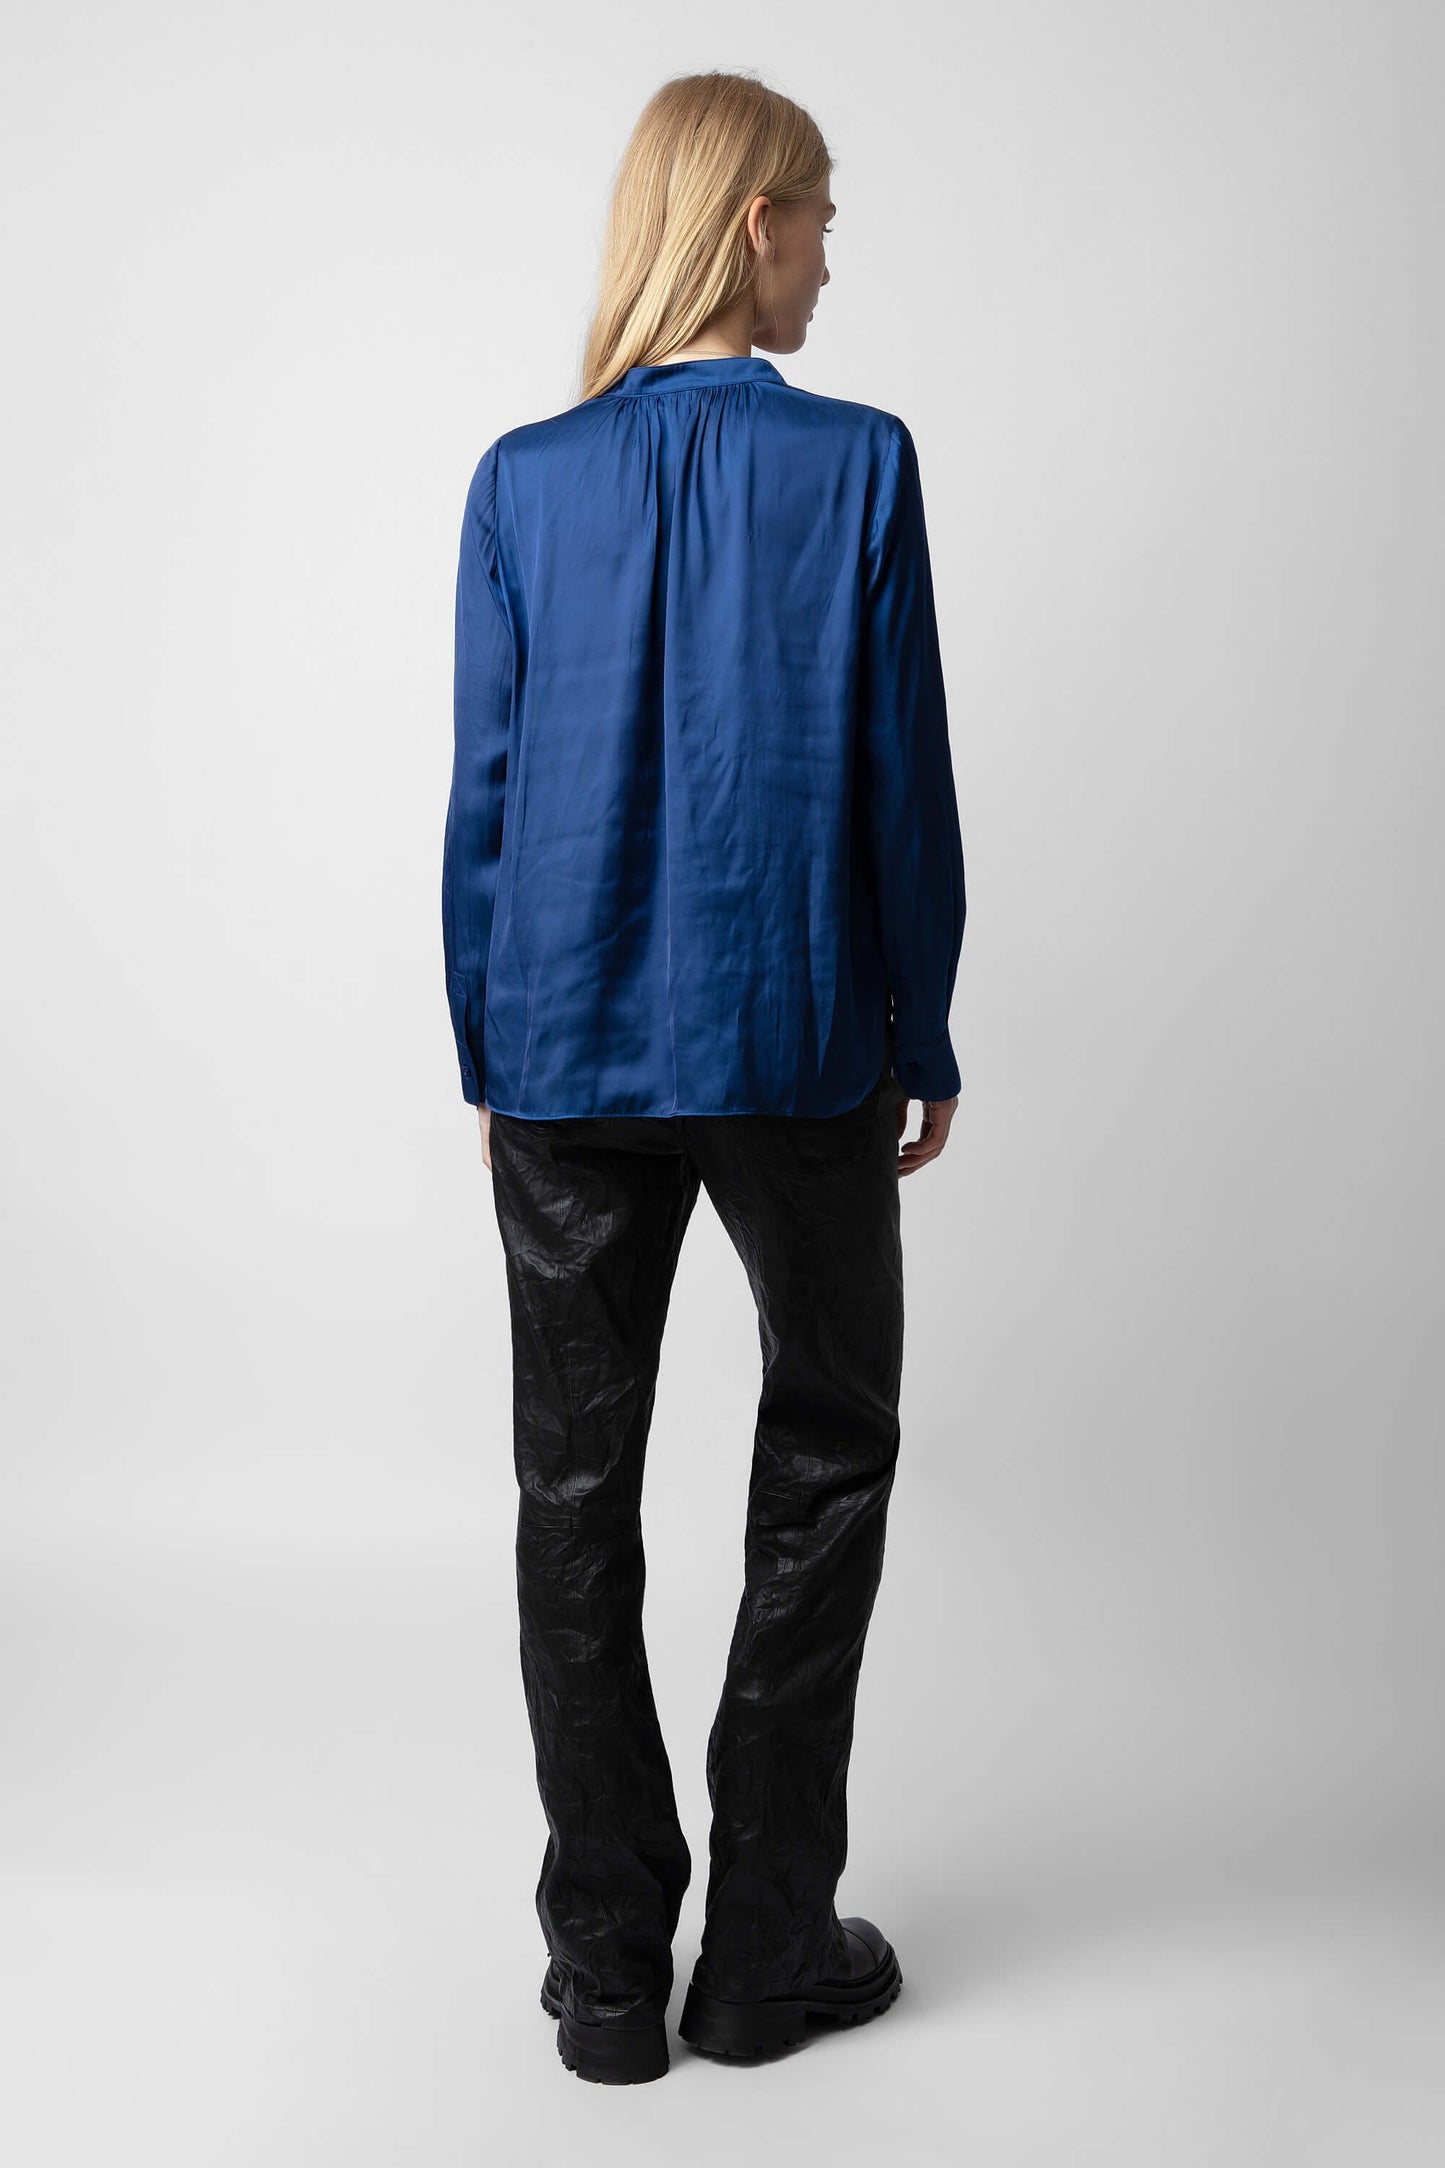 Tink Satin Shirt in Bleu Roi by Zadig - SALE